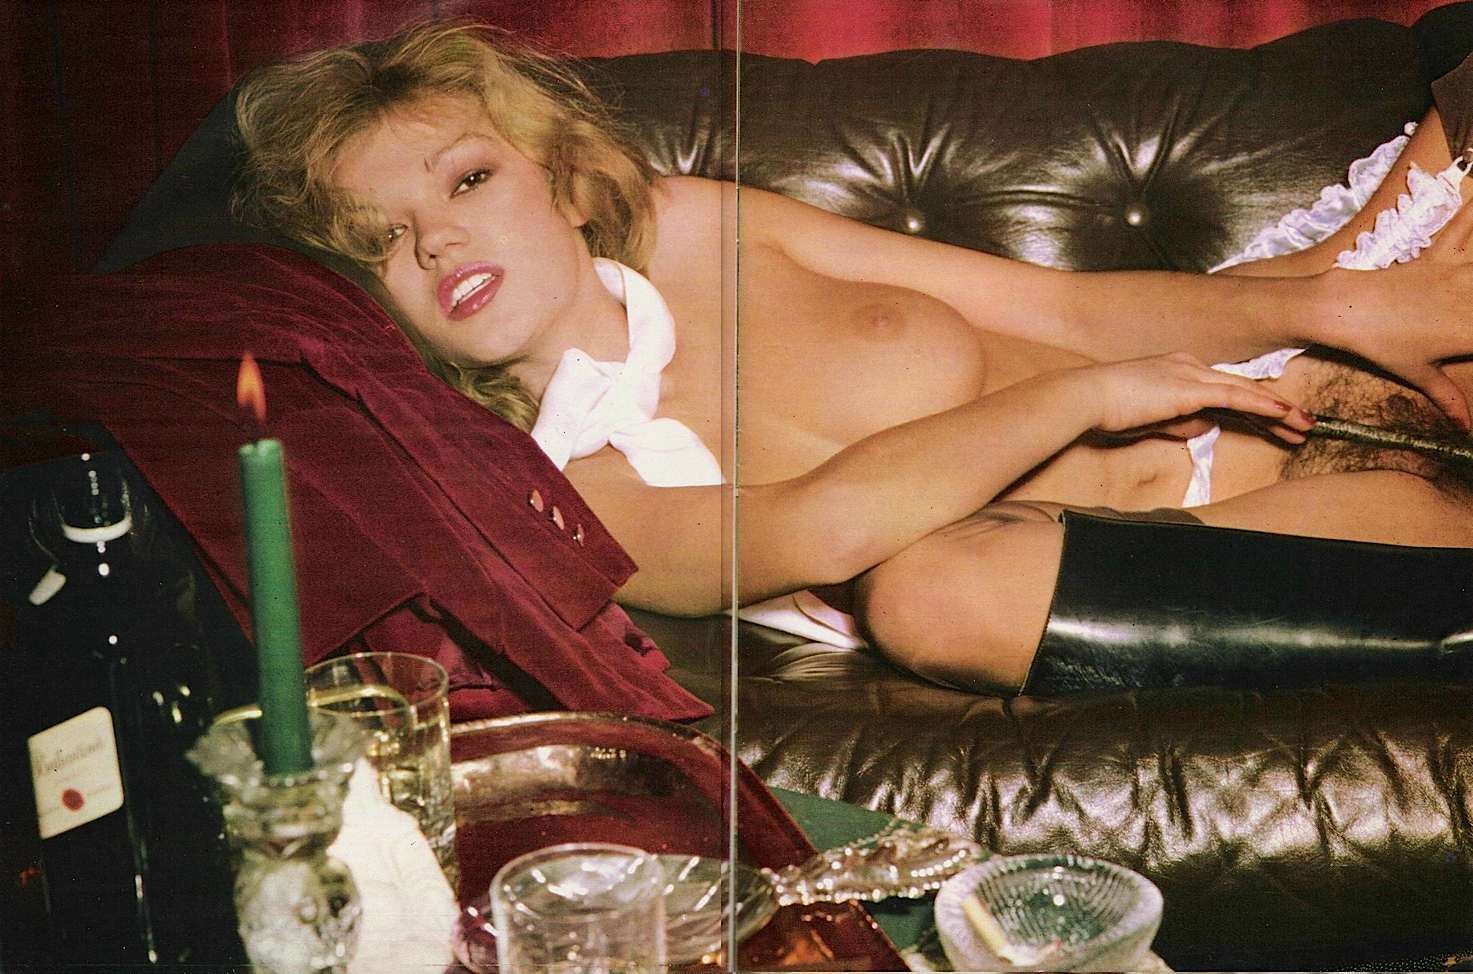 Hairy Vagina Brigitte Lahaie Vintage Pics Porn Pic Xxx